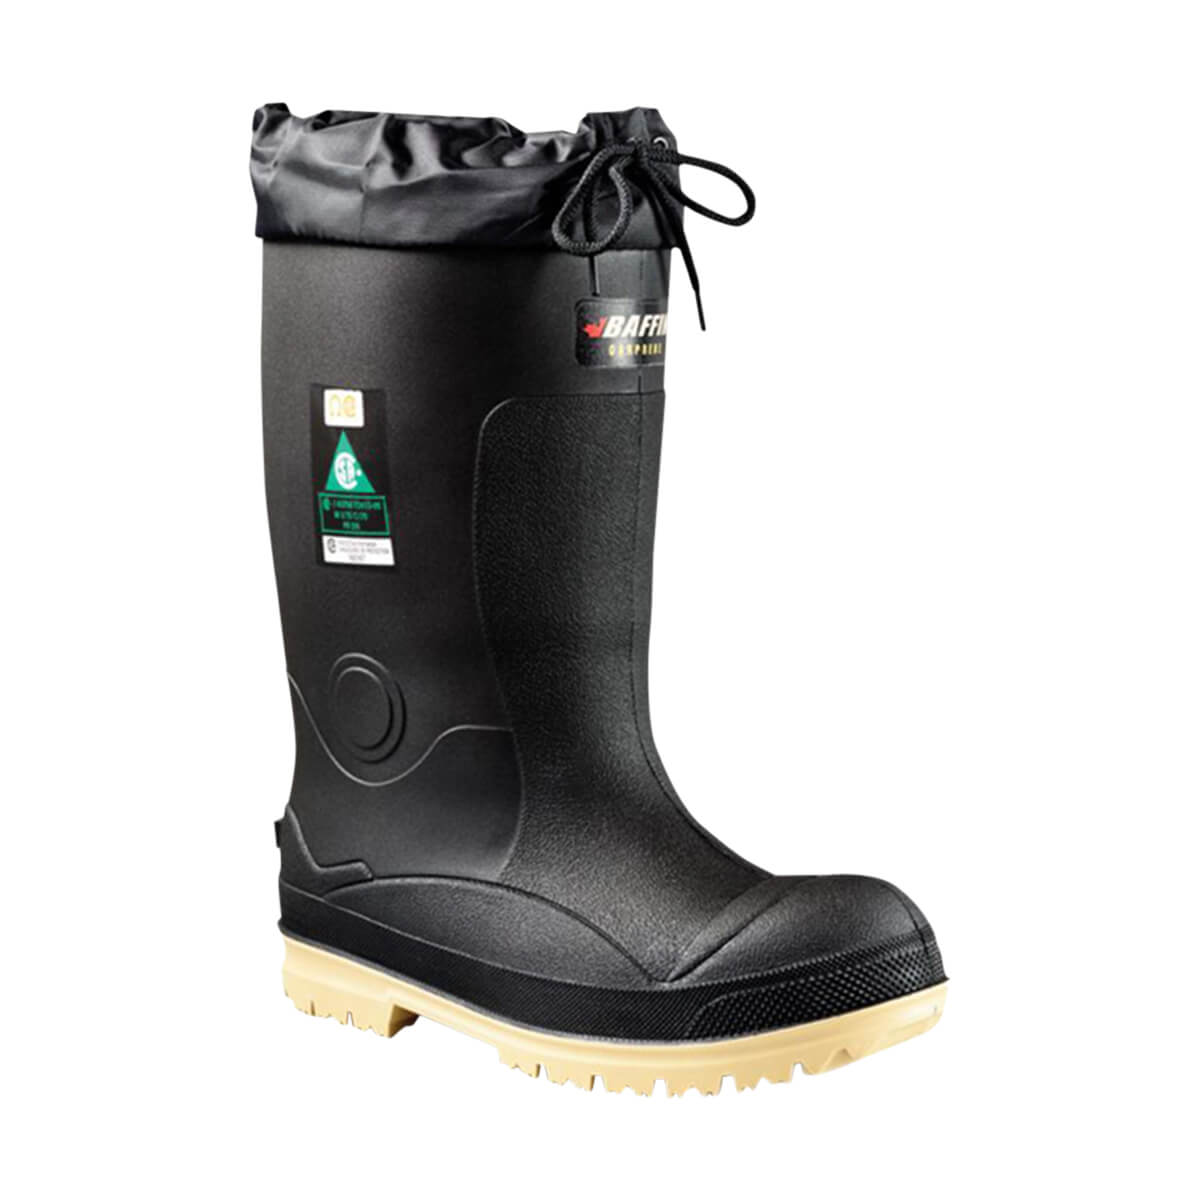 Baffin Men's -100 Titan Safety Boot - Black/Amber